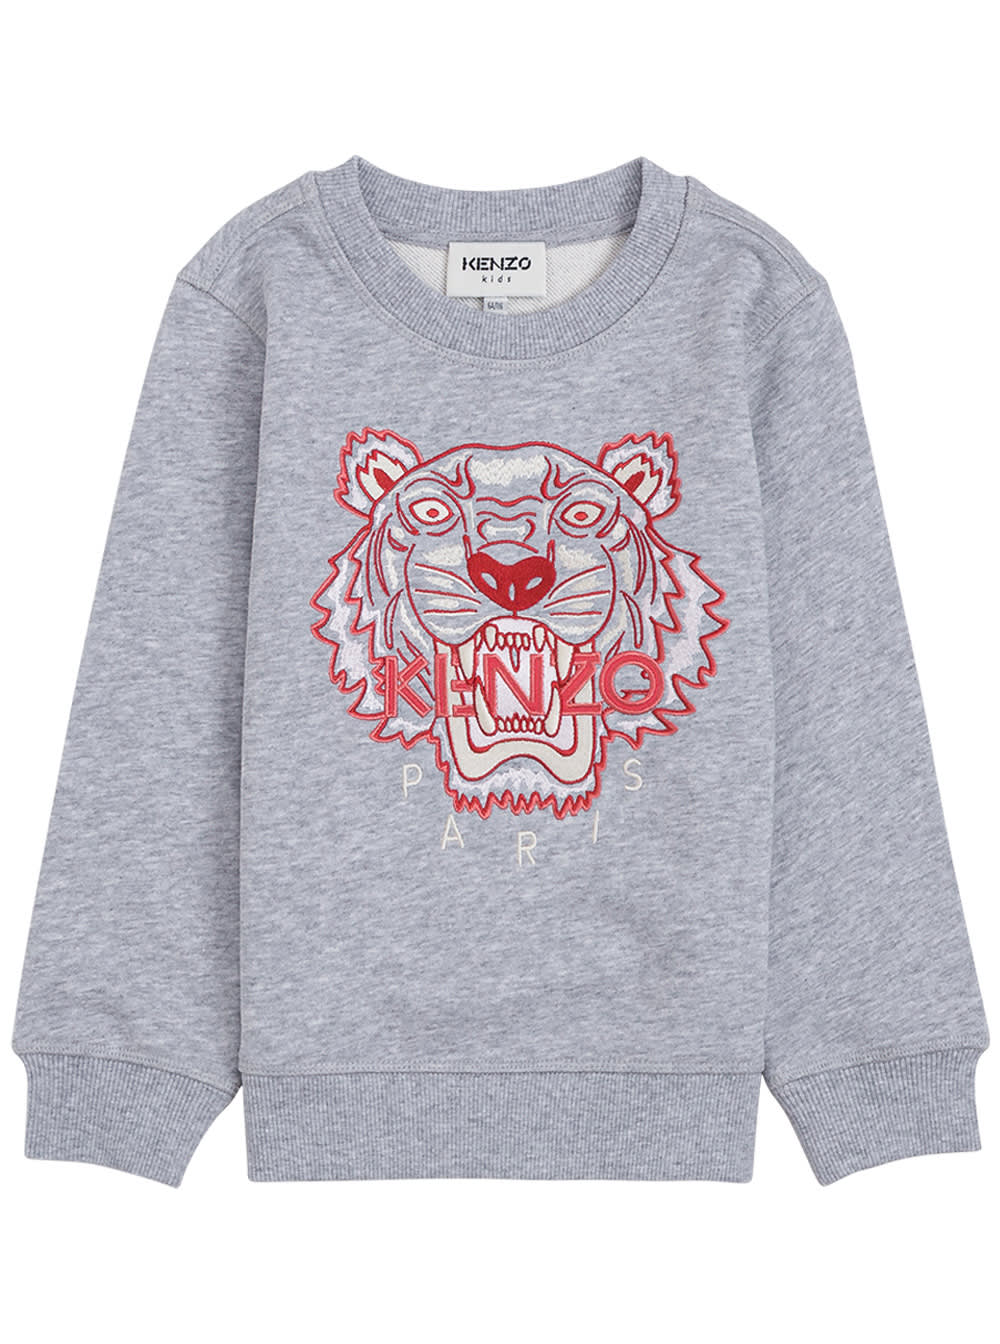 Kenzo Kids Grey Cotton Sweatshirt With Tiger Print